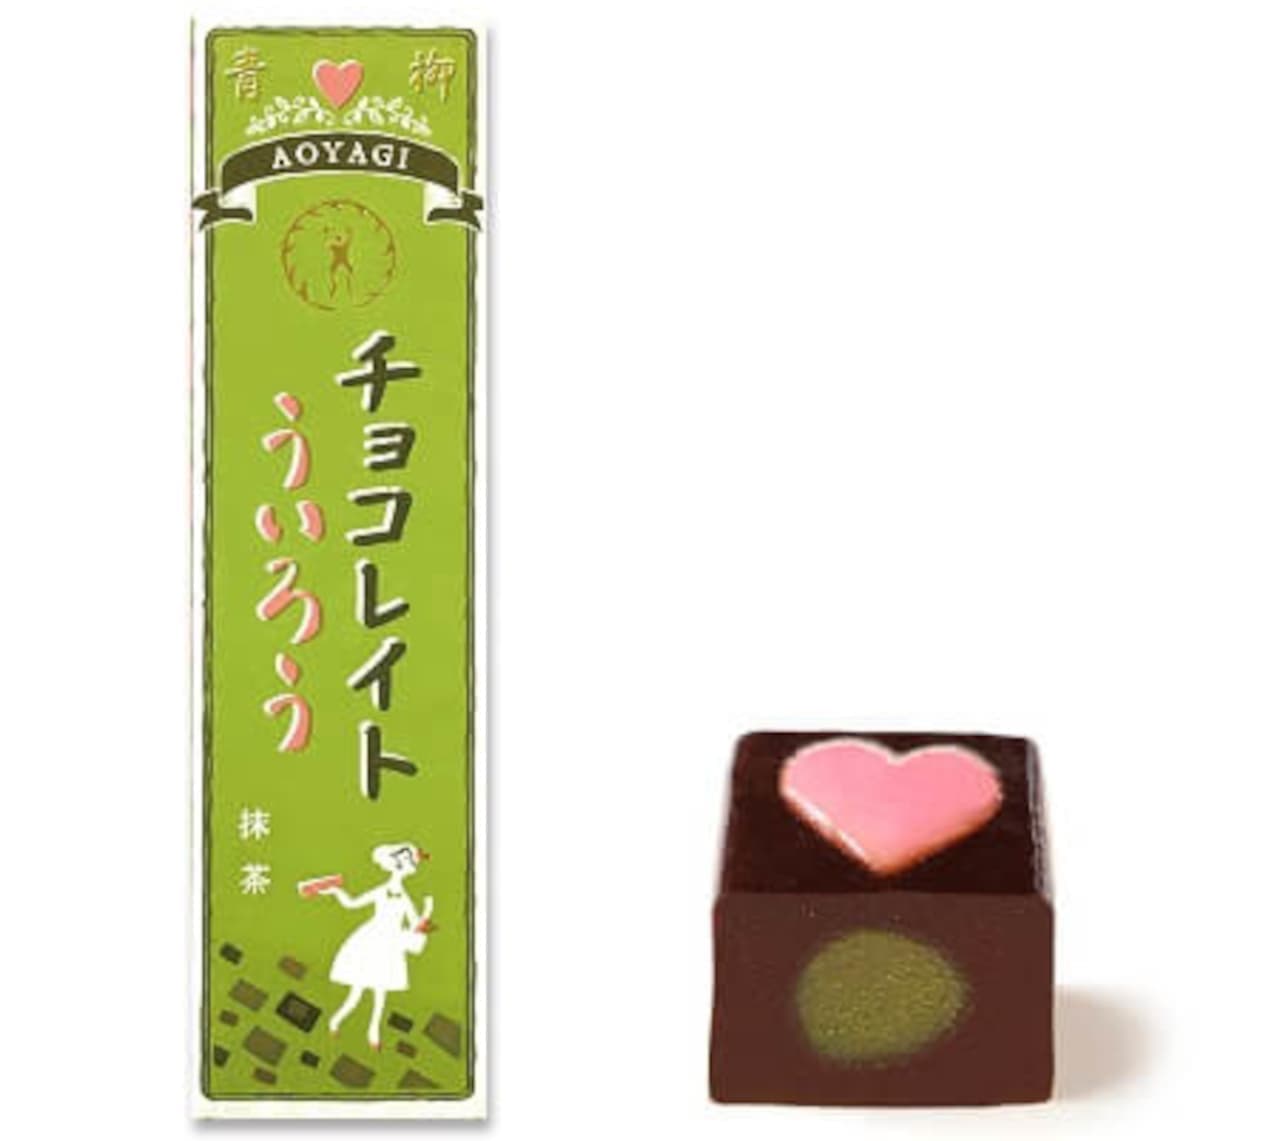 Aoyagi Sohonka "Chocolette Uirou